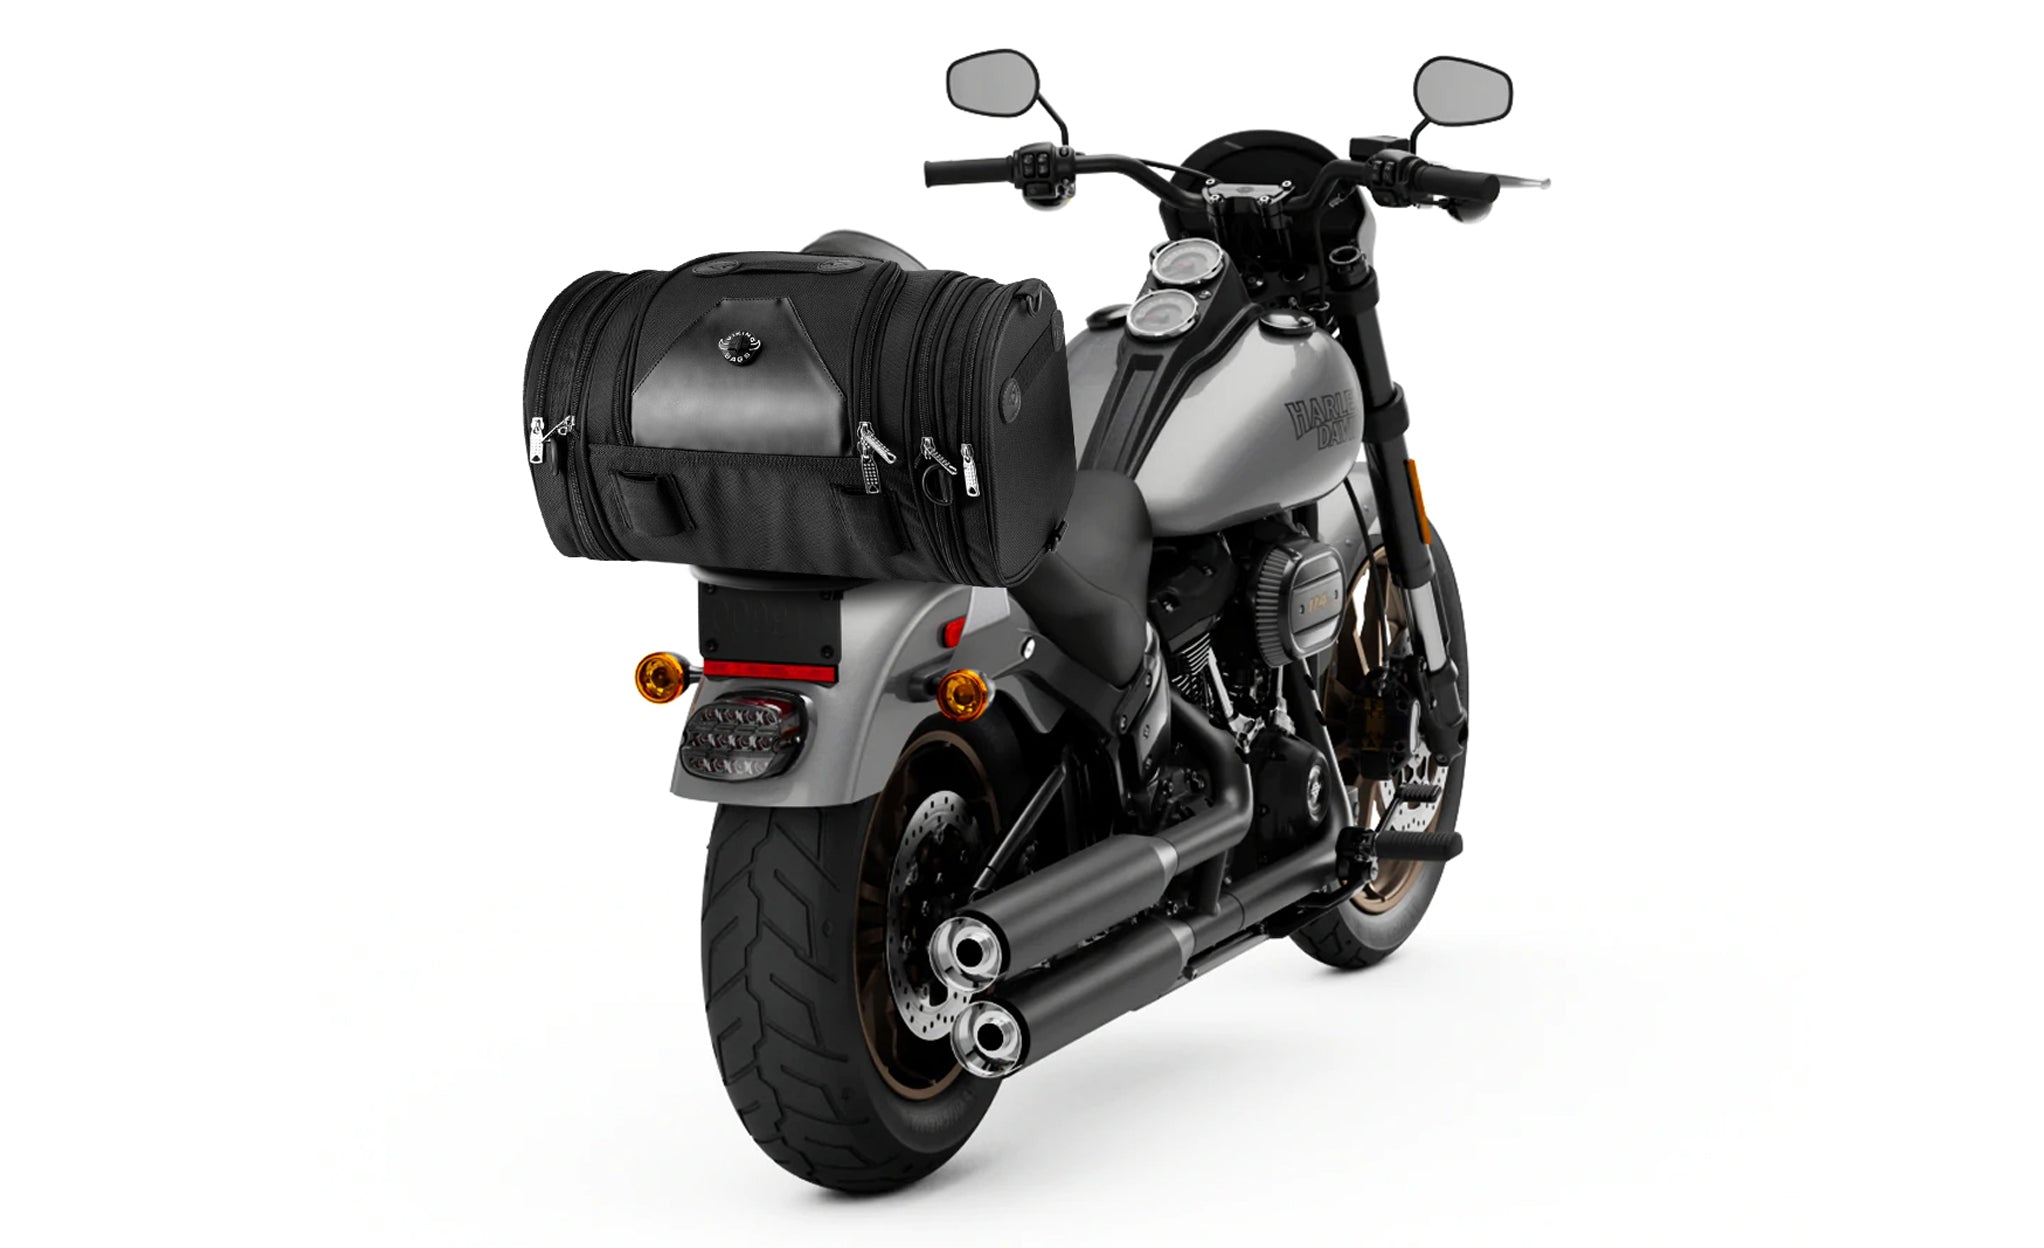 Viking Axwell Small Honda Motorcycle Sissy Bar Bag Bag on Bike View @expand